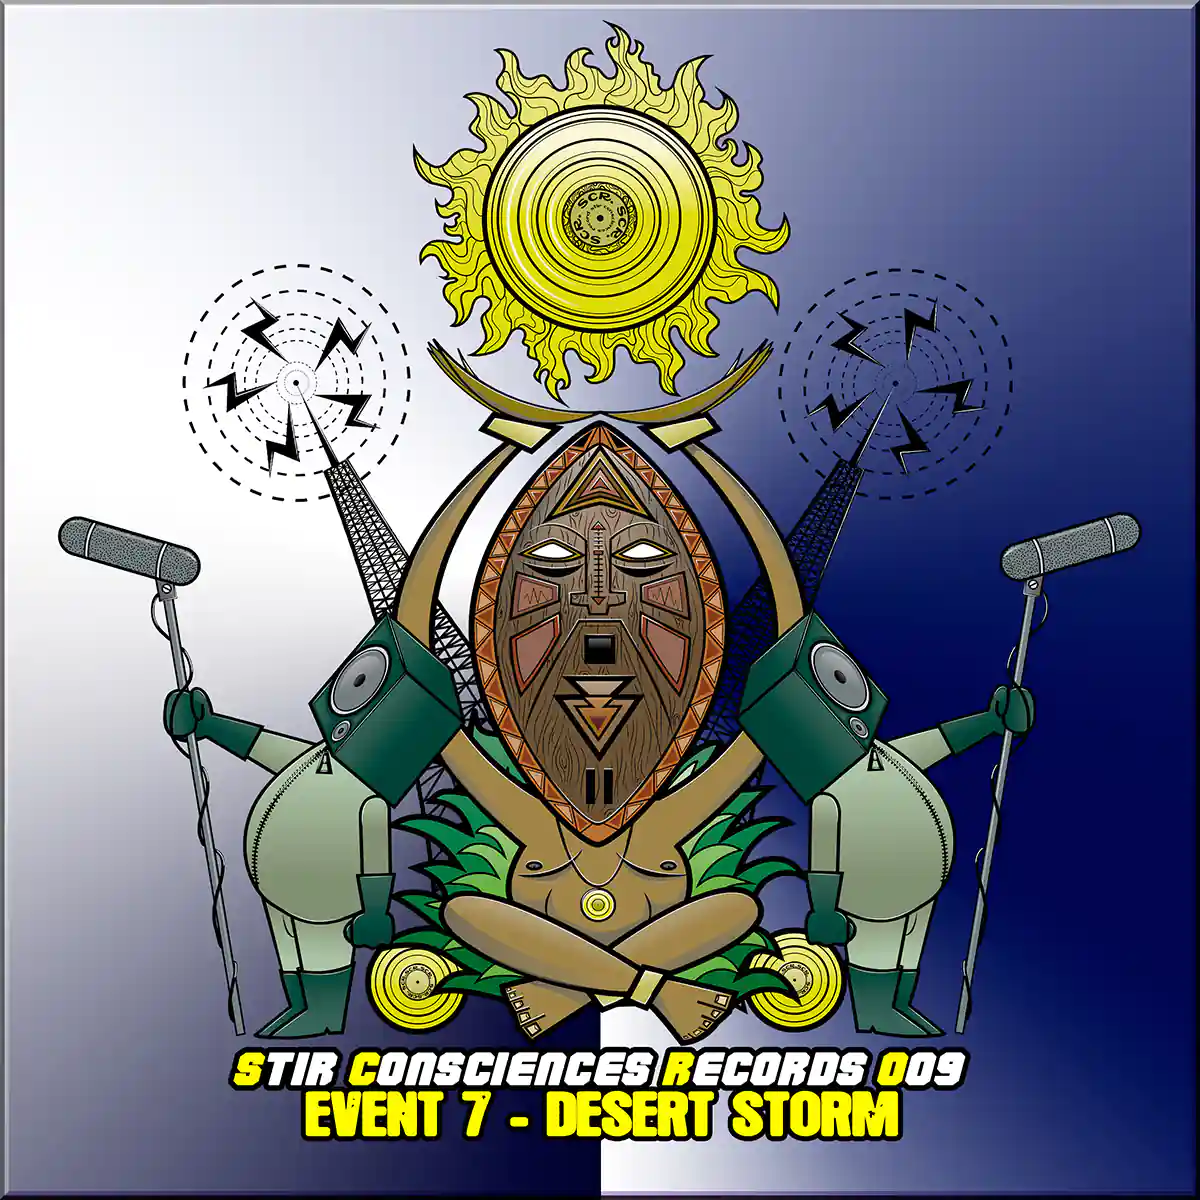 The Event 7 - Desert Storm - Stir Consciences Records 009